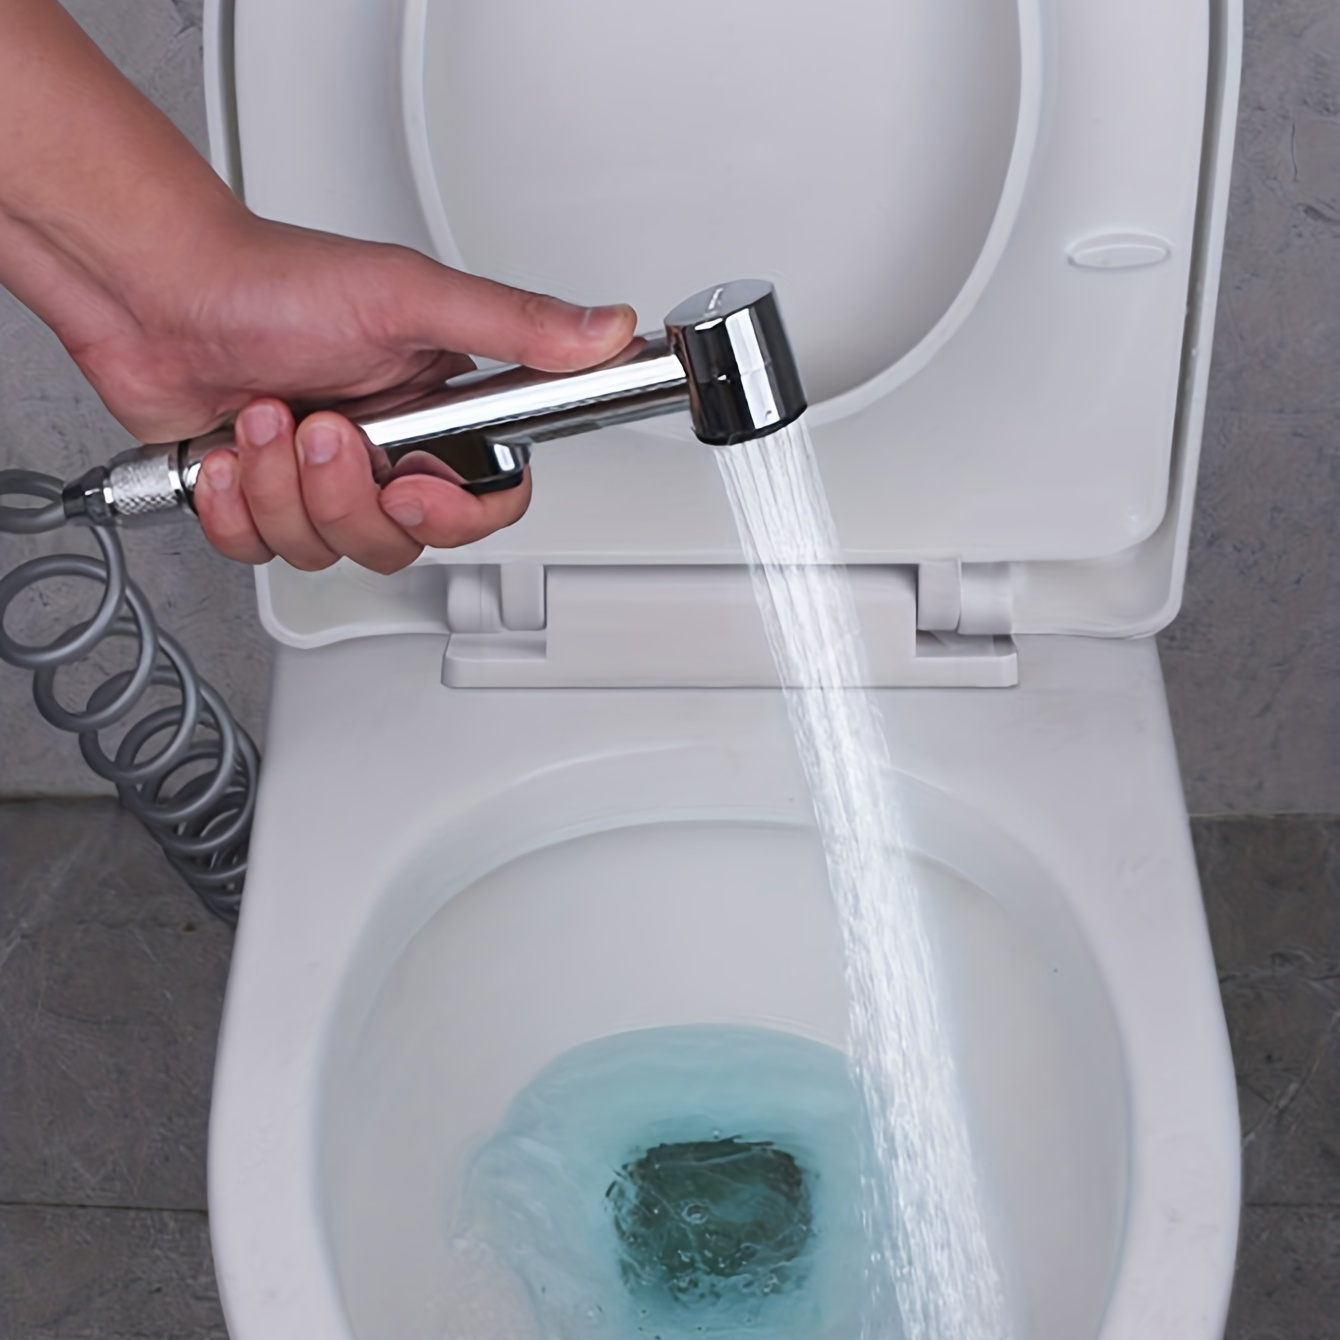 Easy4You-Bidet para WC-Bidet portatil para WC-Ducha higienica para WC-Grifo  WC-Bide portatil-Grifo para WC-Inodoro con Chorro de Agua-Ducha